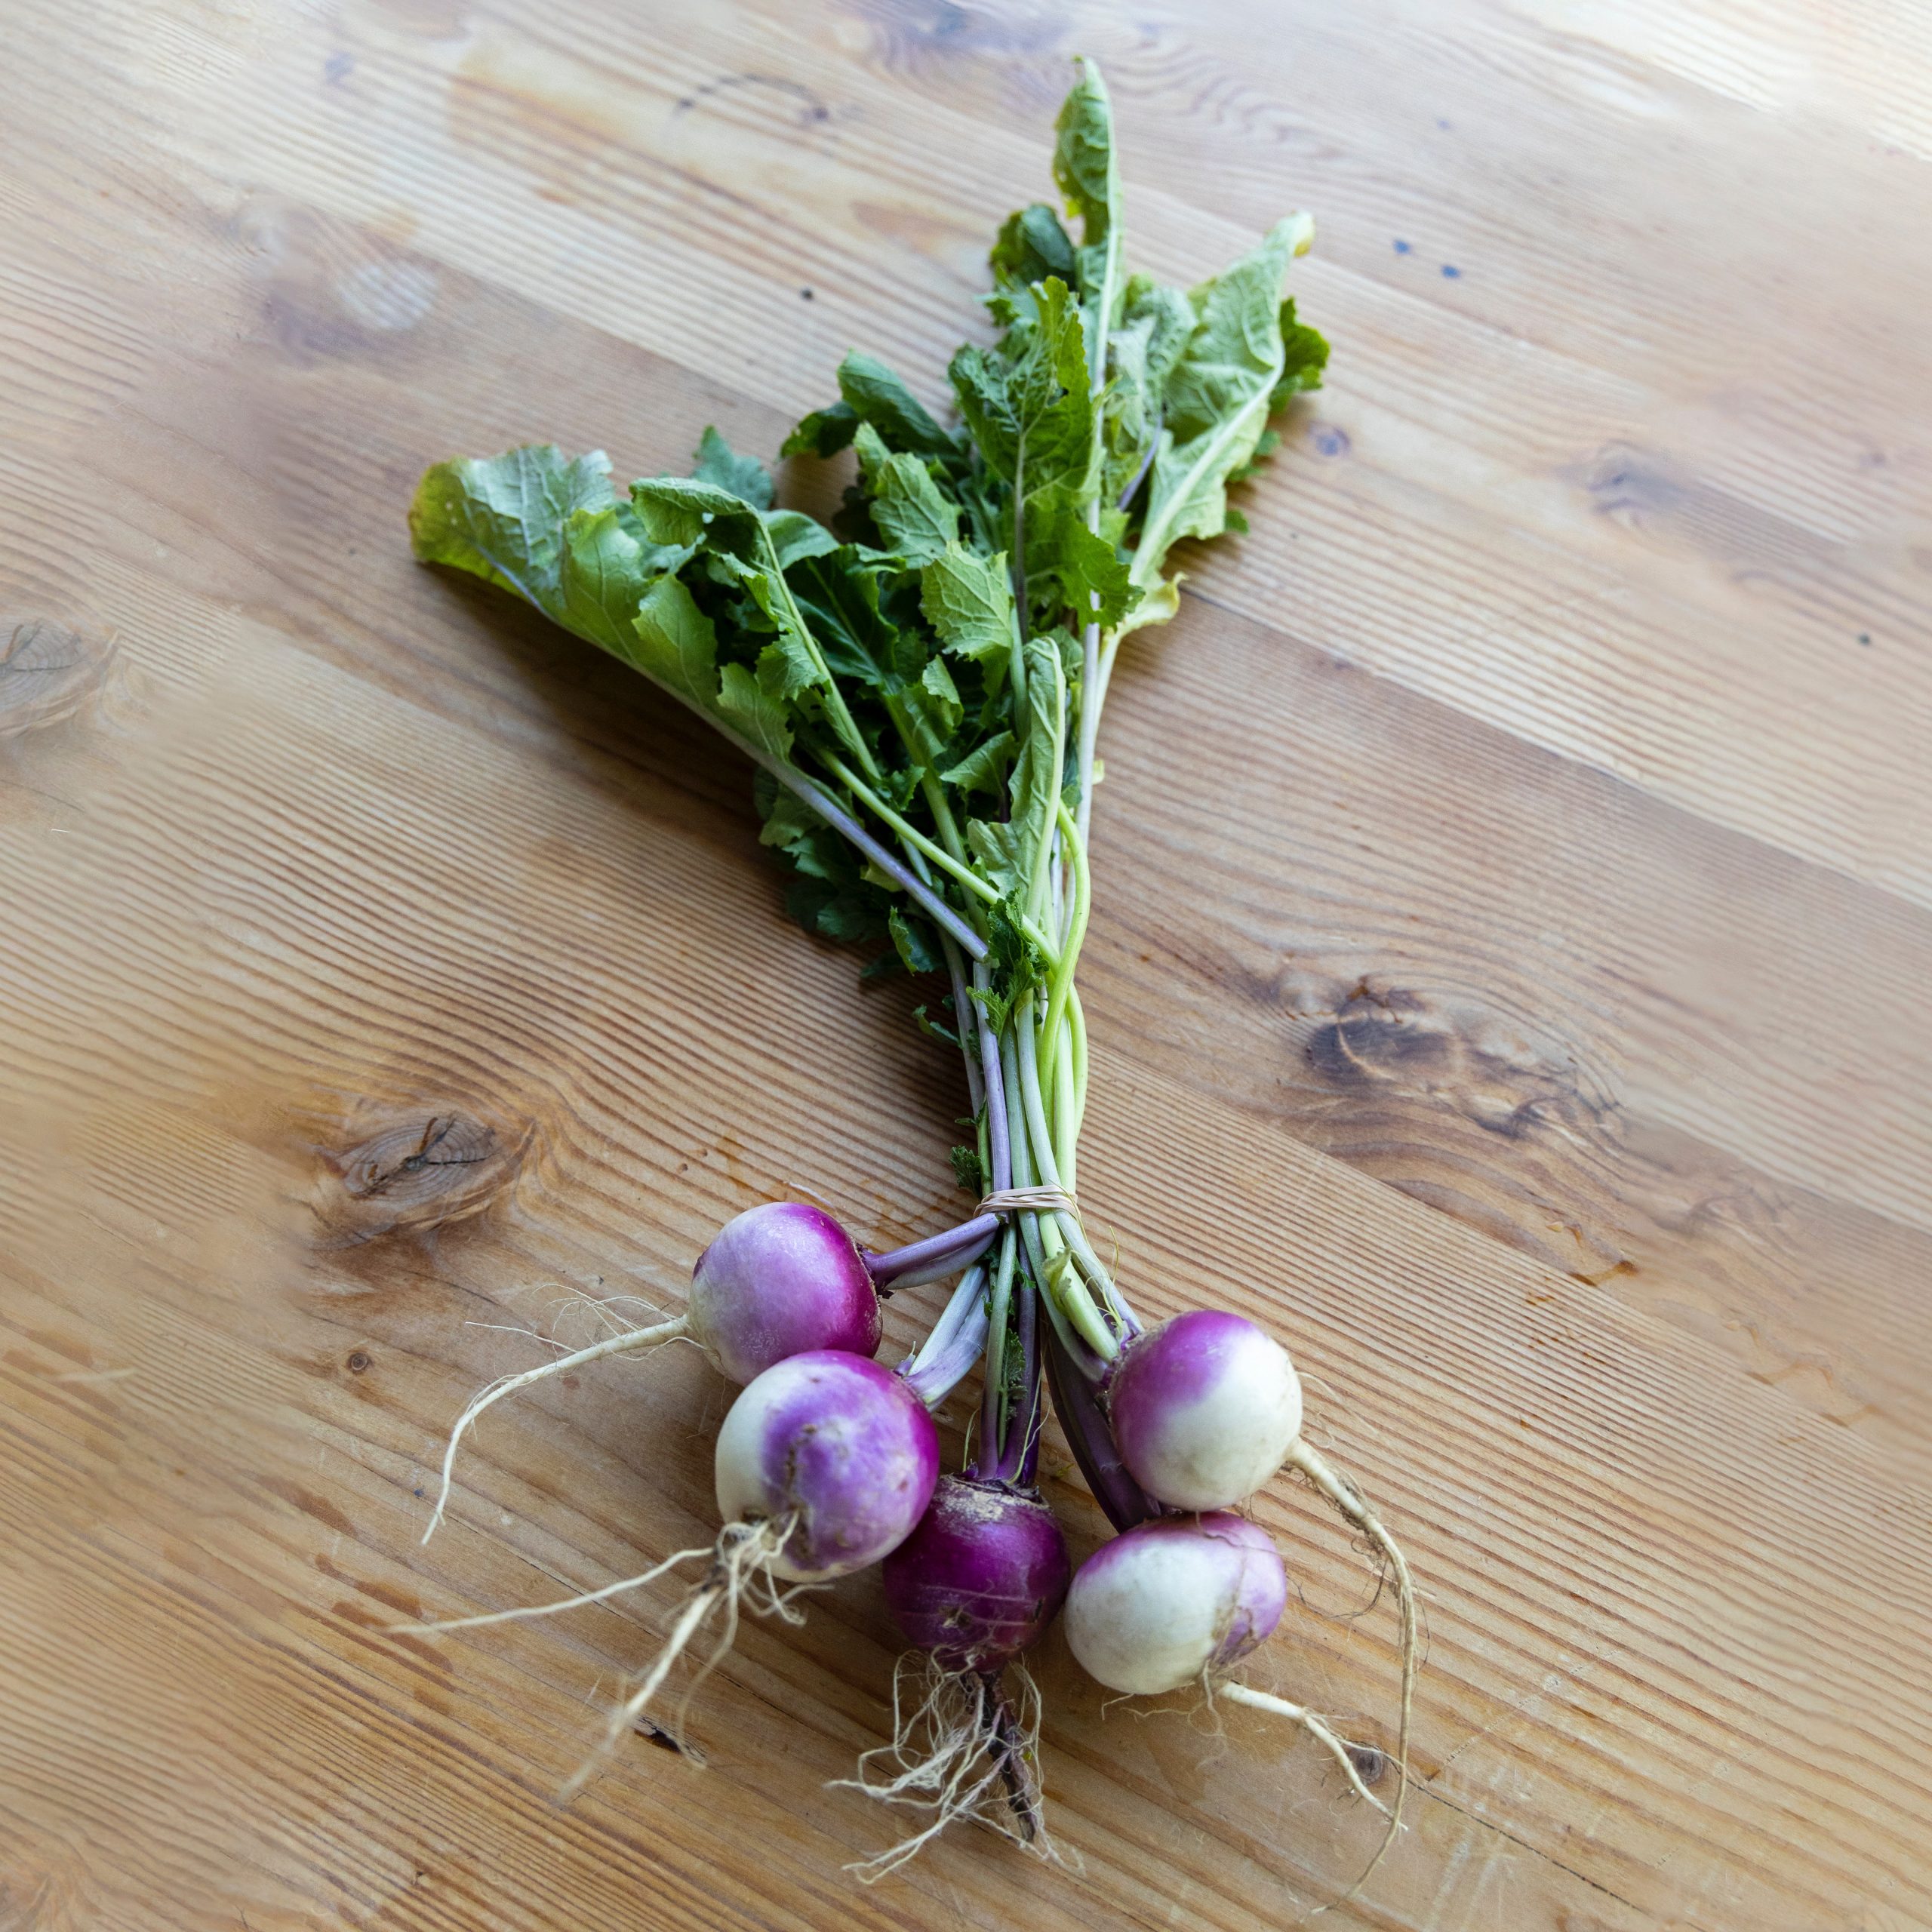 How to Store Turnips